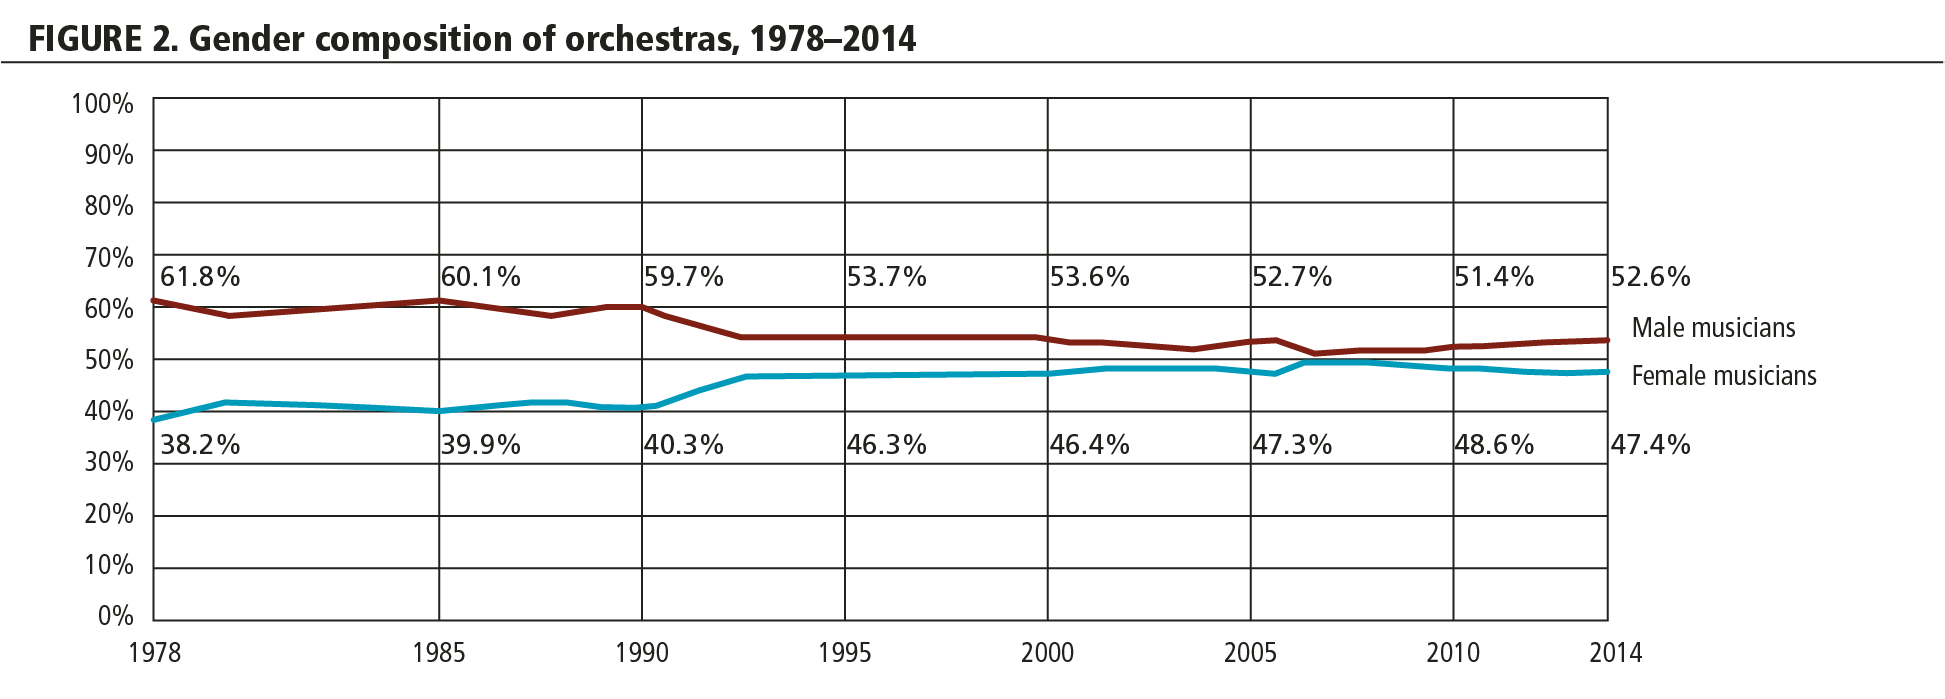 FIGURE 2. Gender composition of orchestras, 1978-2014